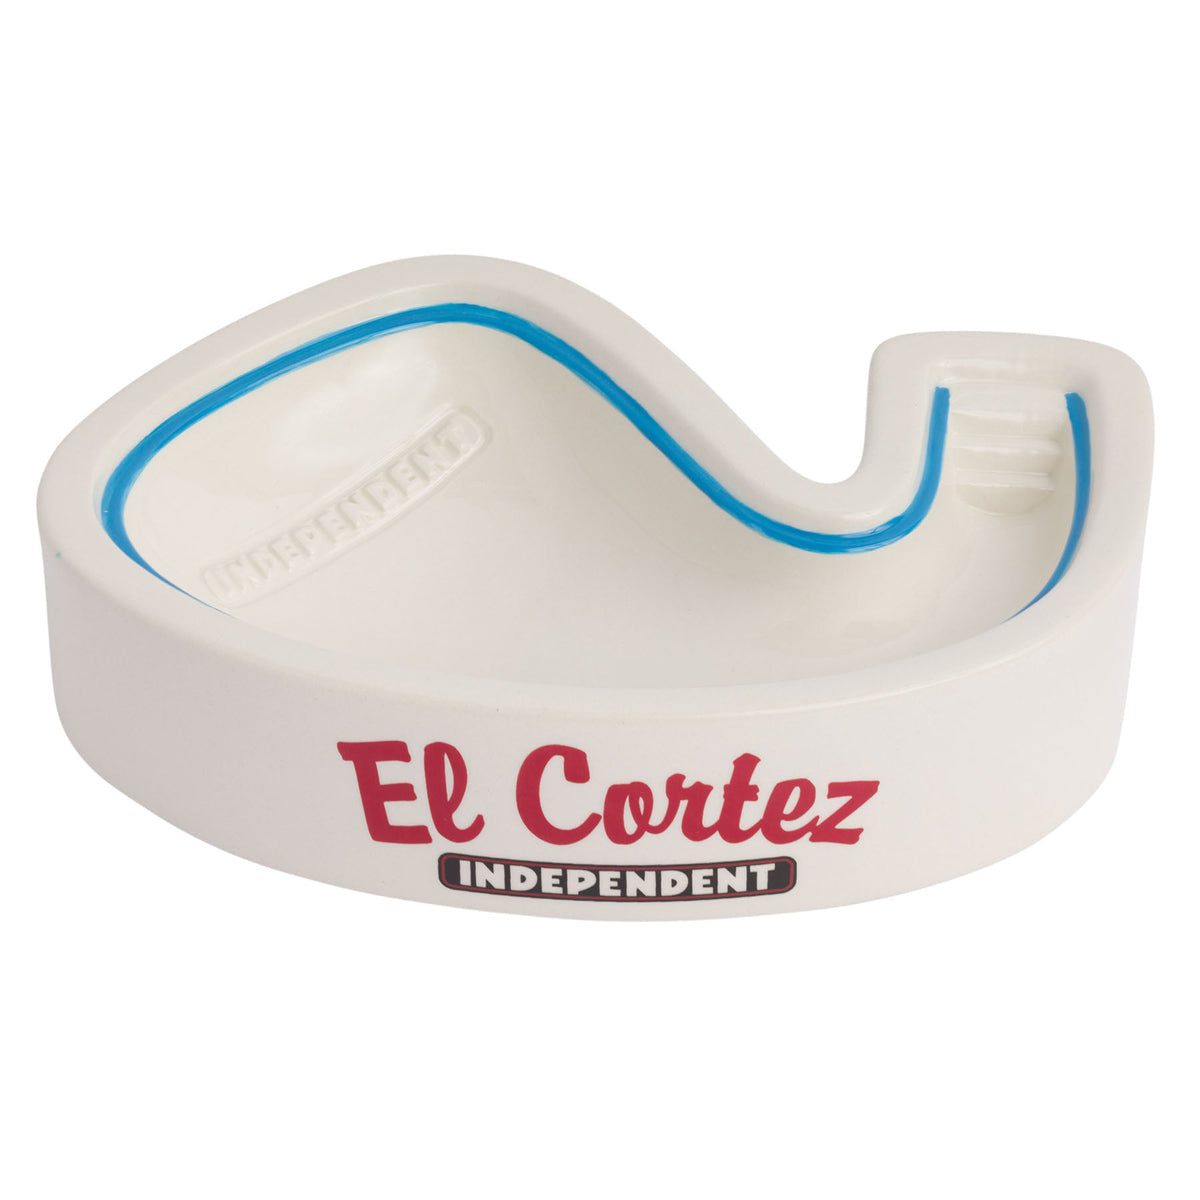 Independent El Cortez Valet Accessories - White image 1